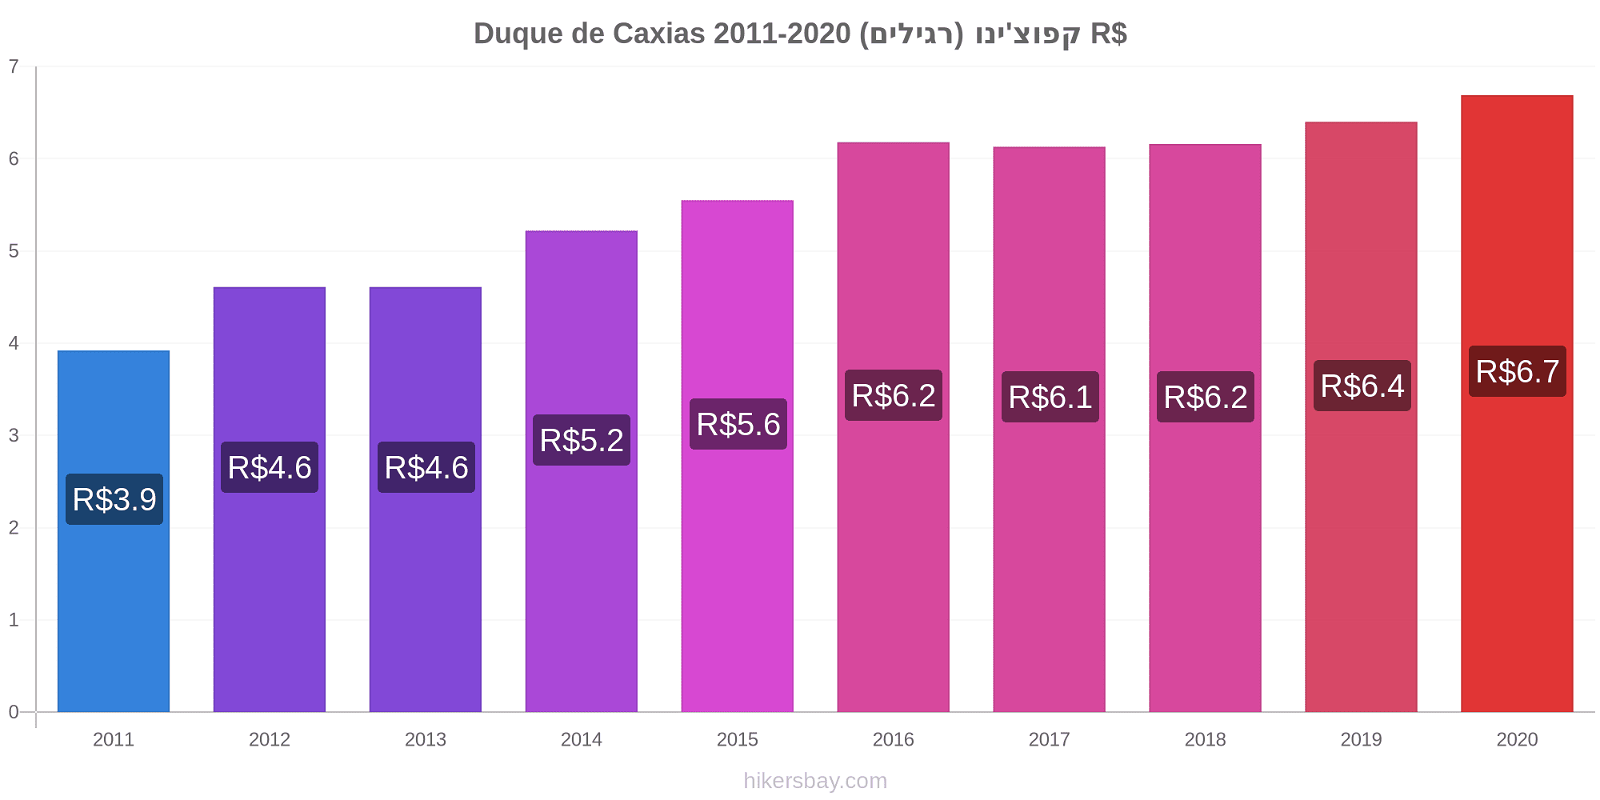 Duque de Caxias שינויי מחירים קפוצ'ינו (רגילים) hikersbay.com